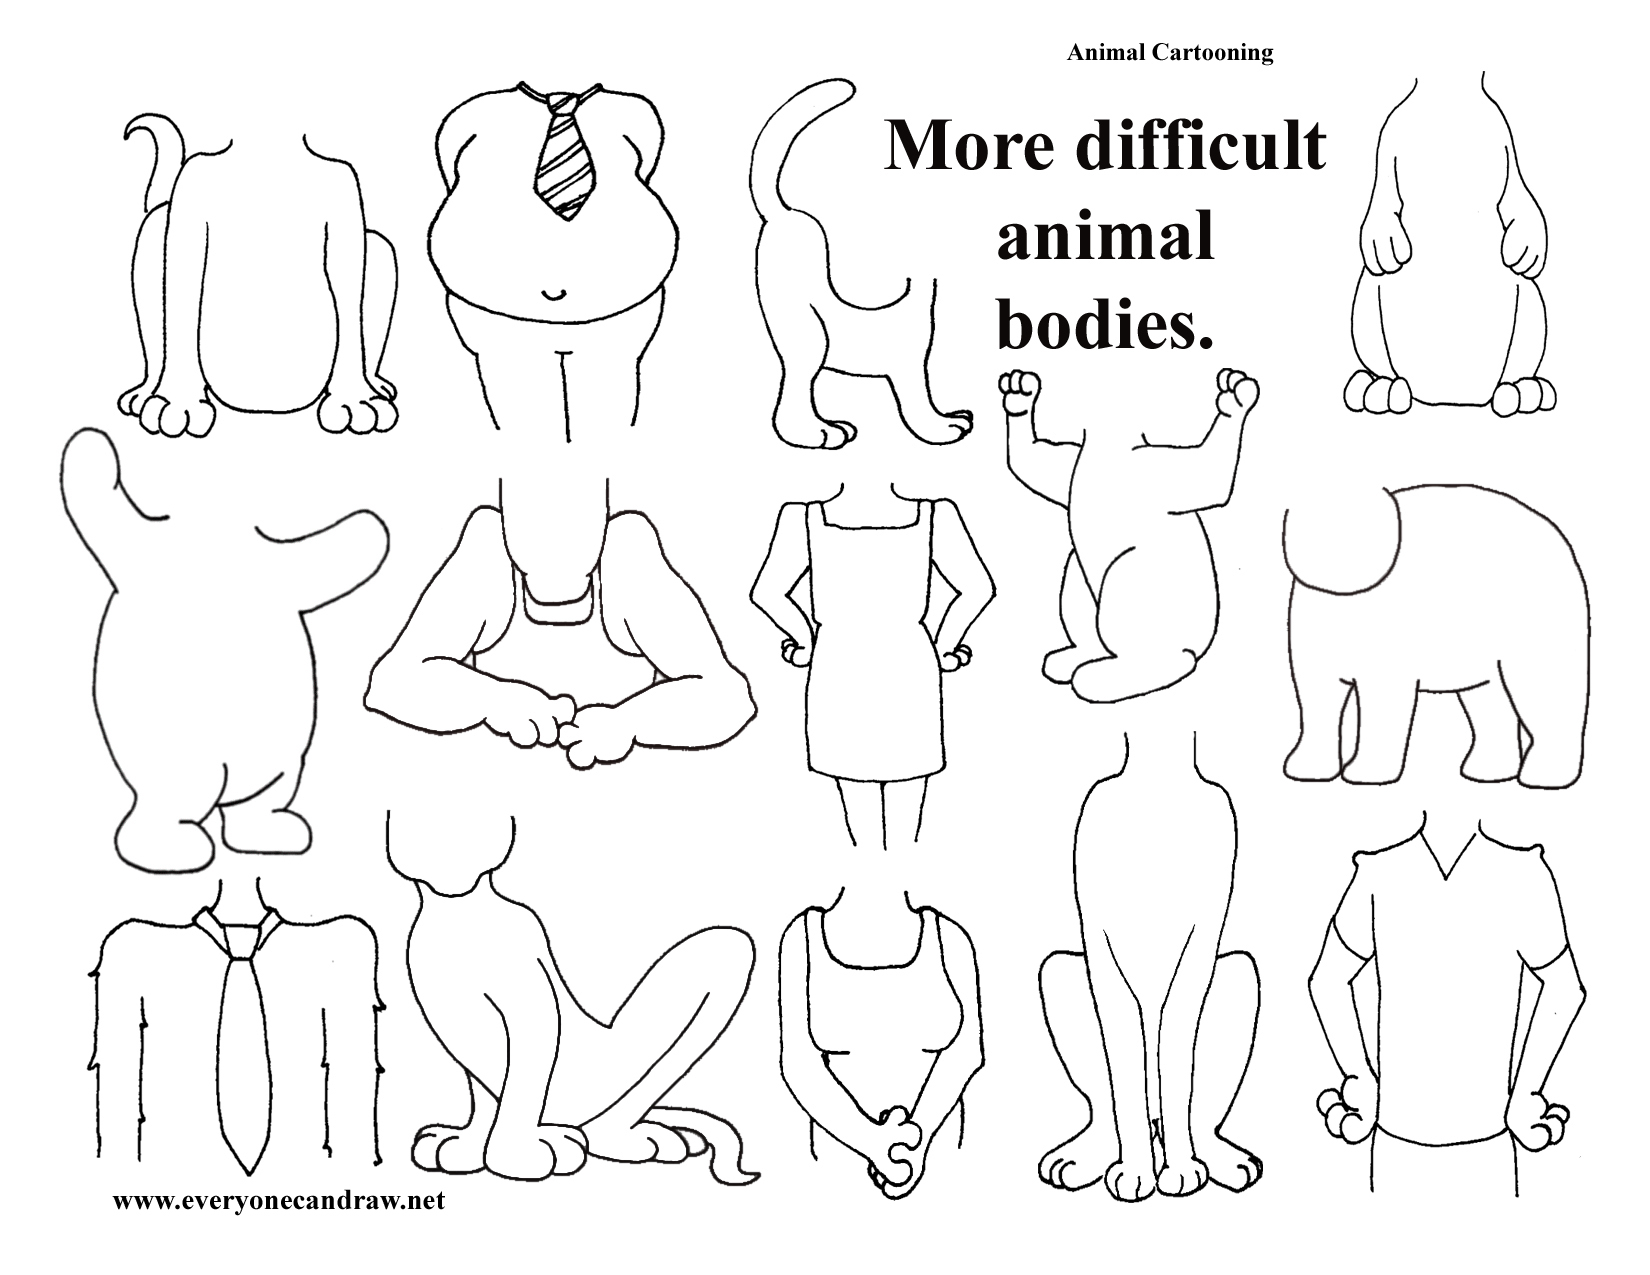 Animal bodies - more difficult